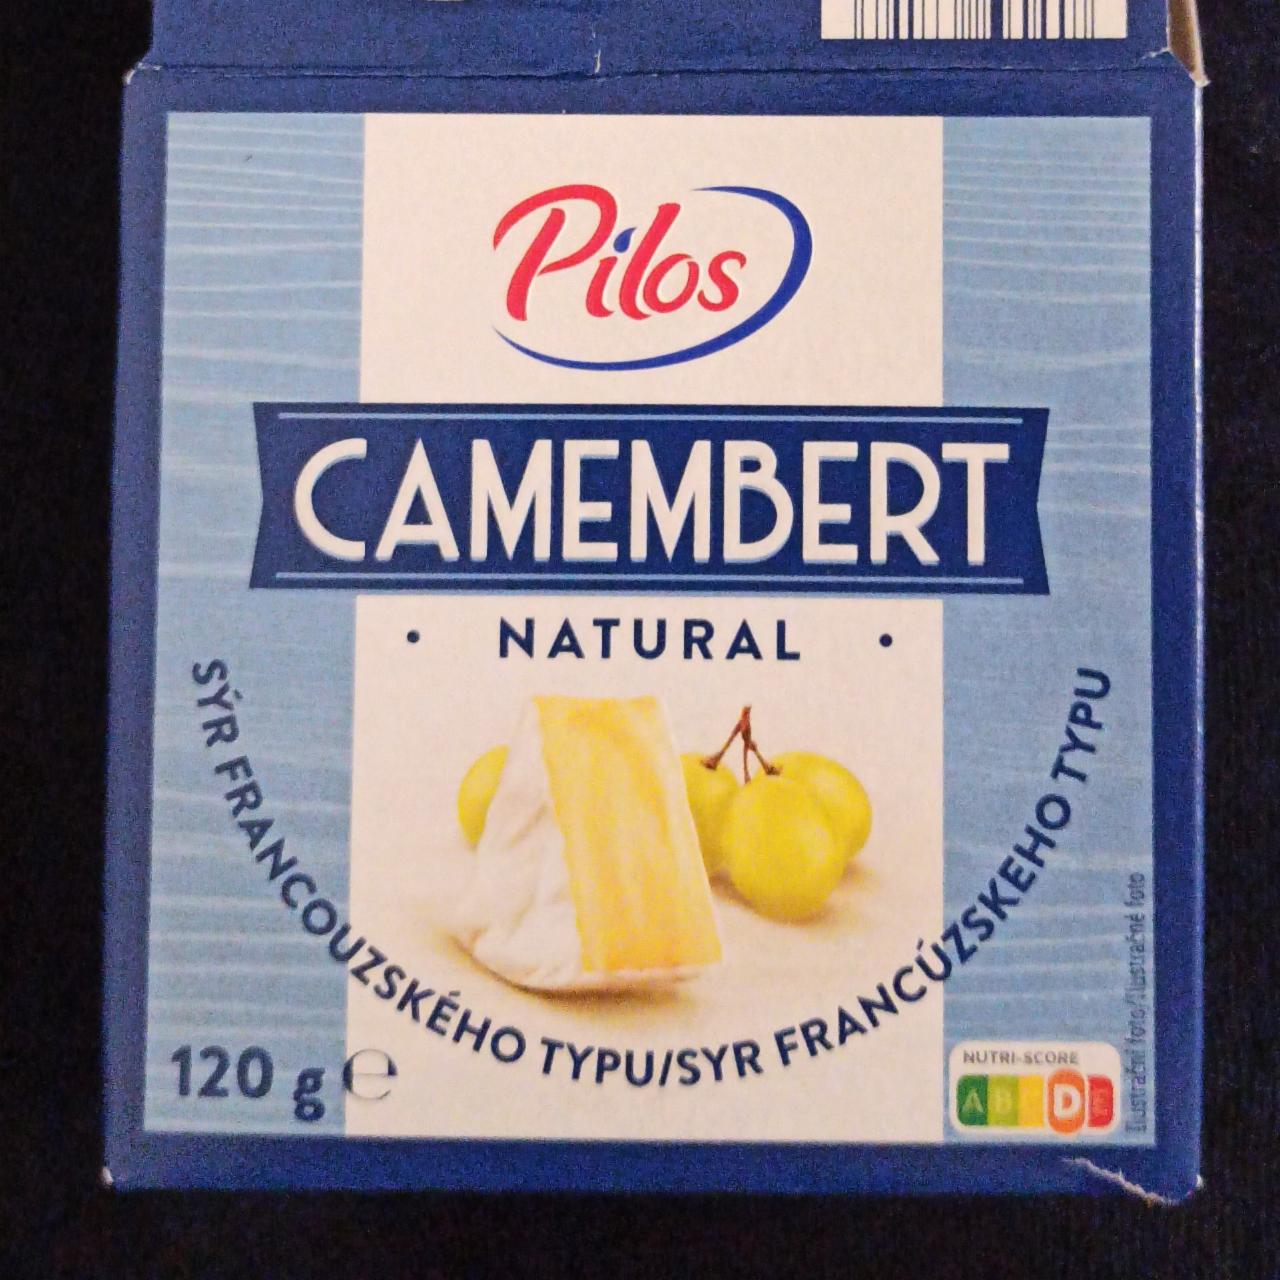 Zdjęcia - Camembert naturalny Pilos